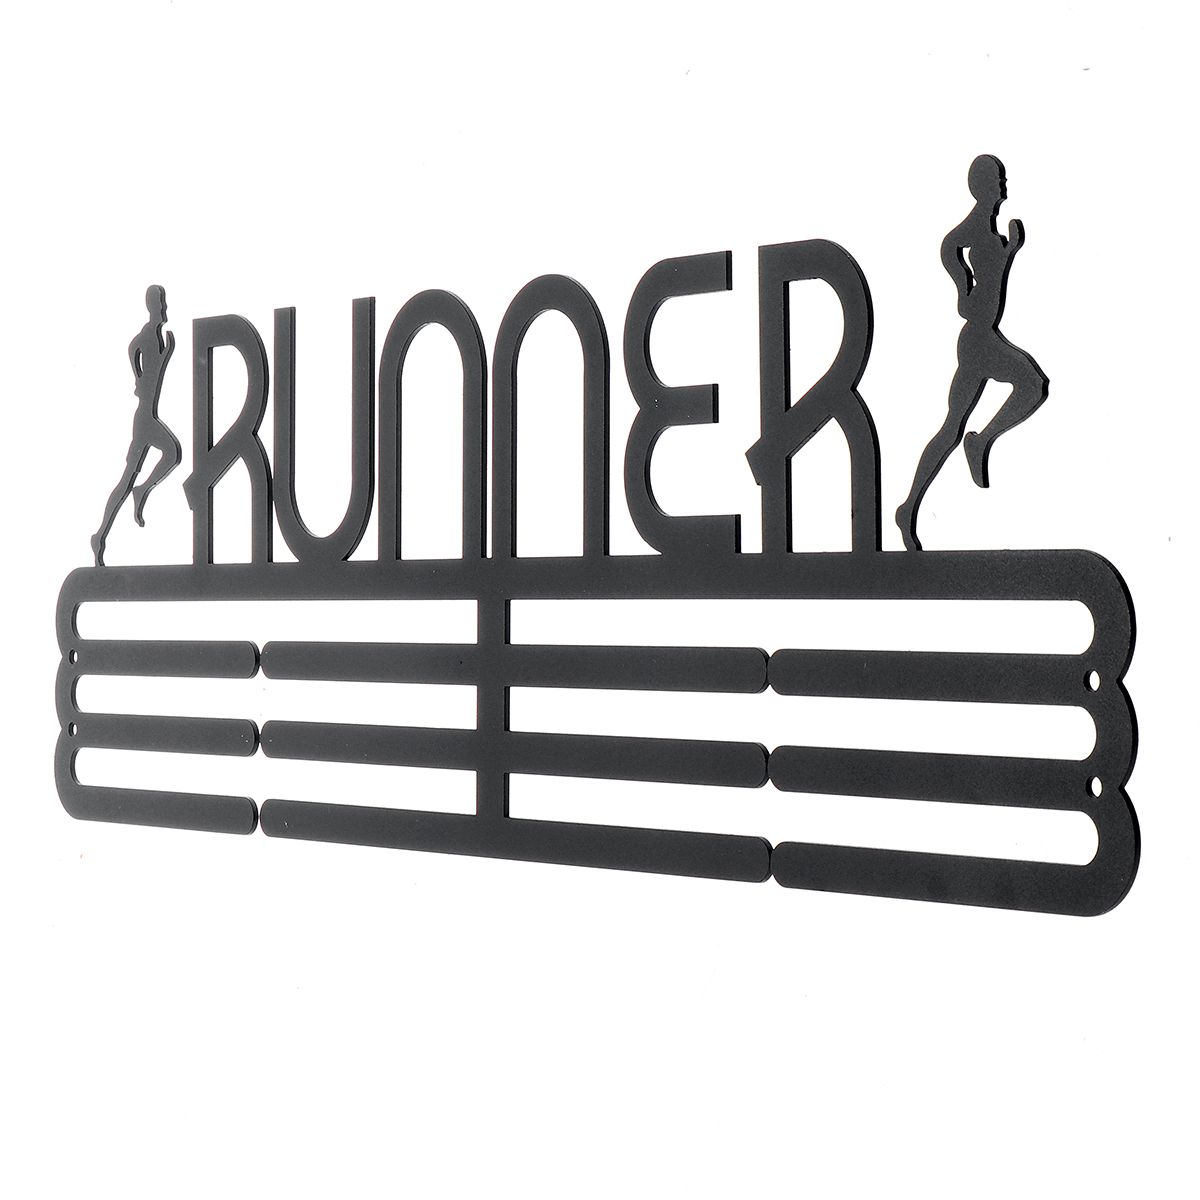 Personalised-Runner-Medal-Hanger-Medal-Holder-Sport-Running-Medals-Rack-Home-Decorations-1600221